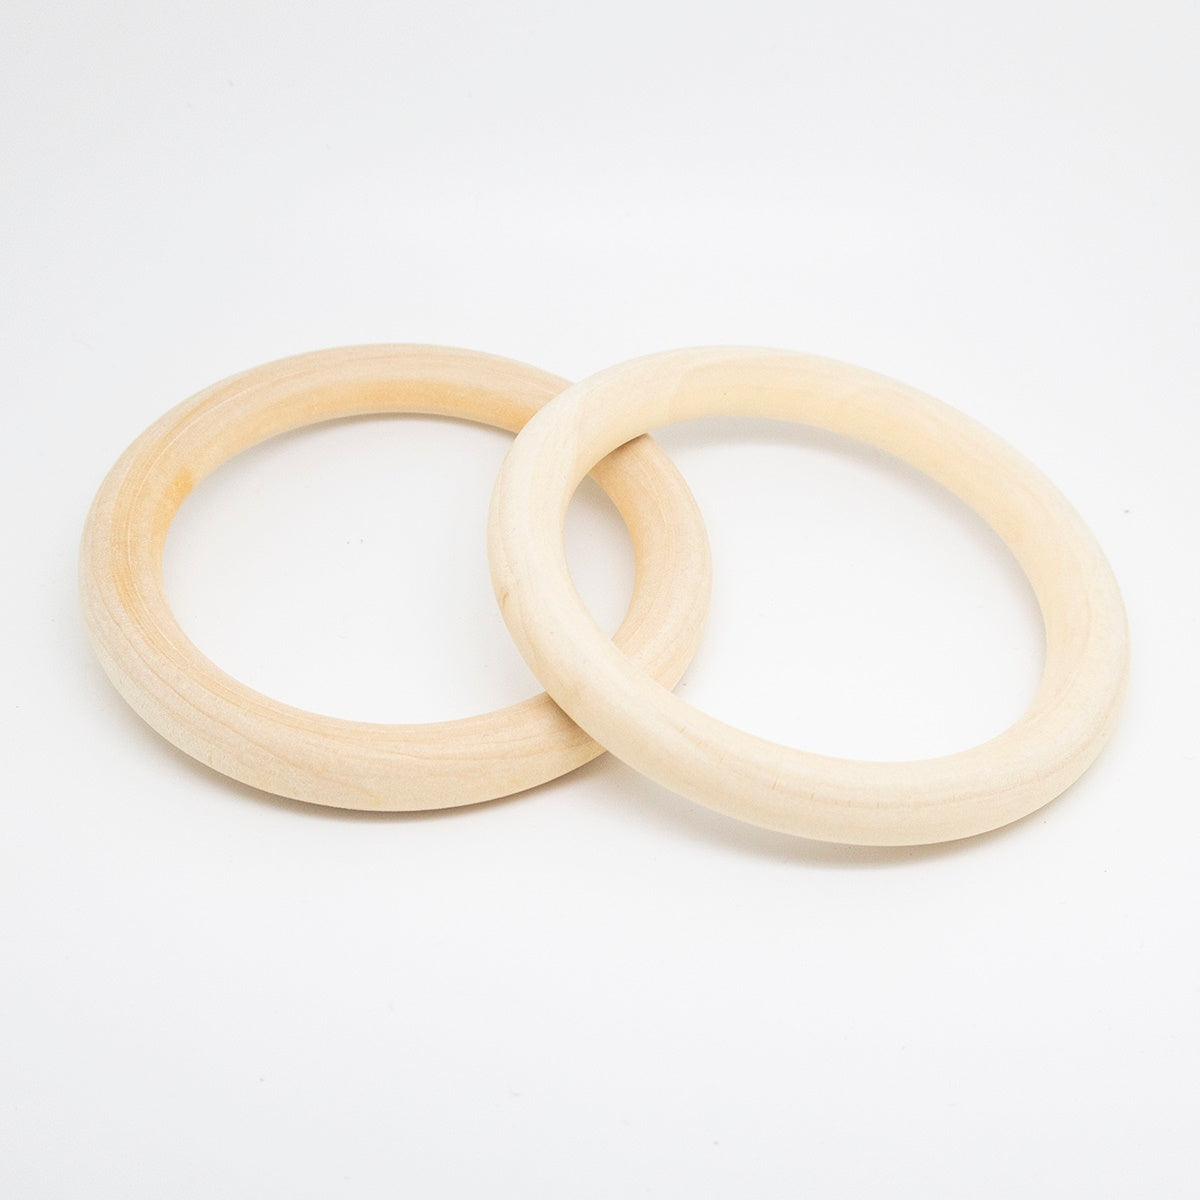 Wooden Rings for Macramé